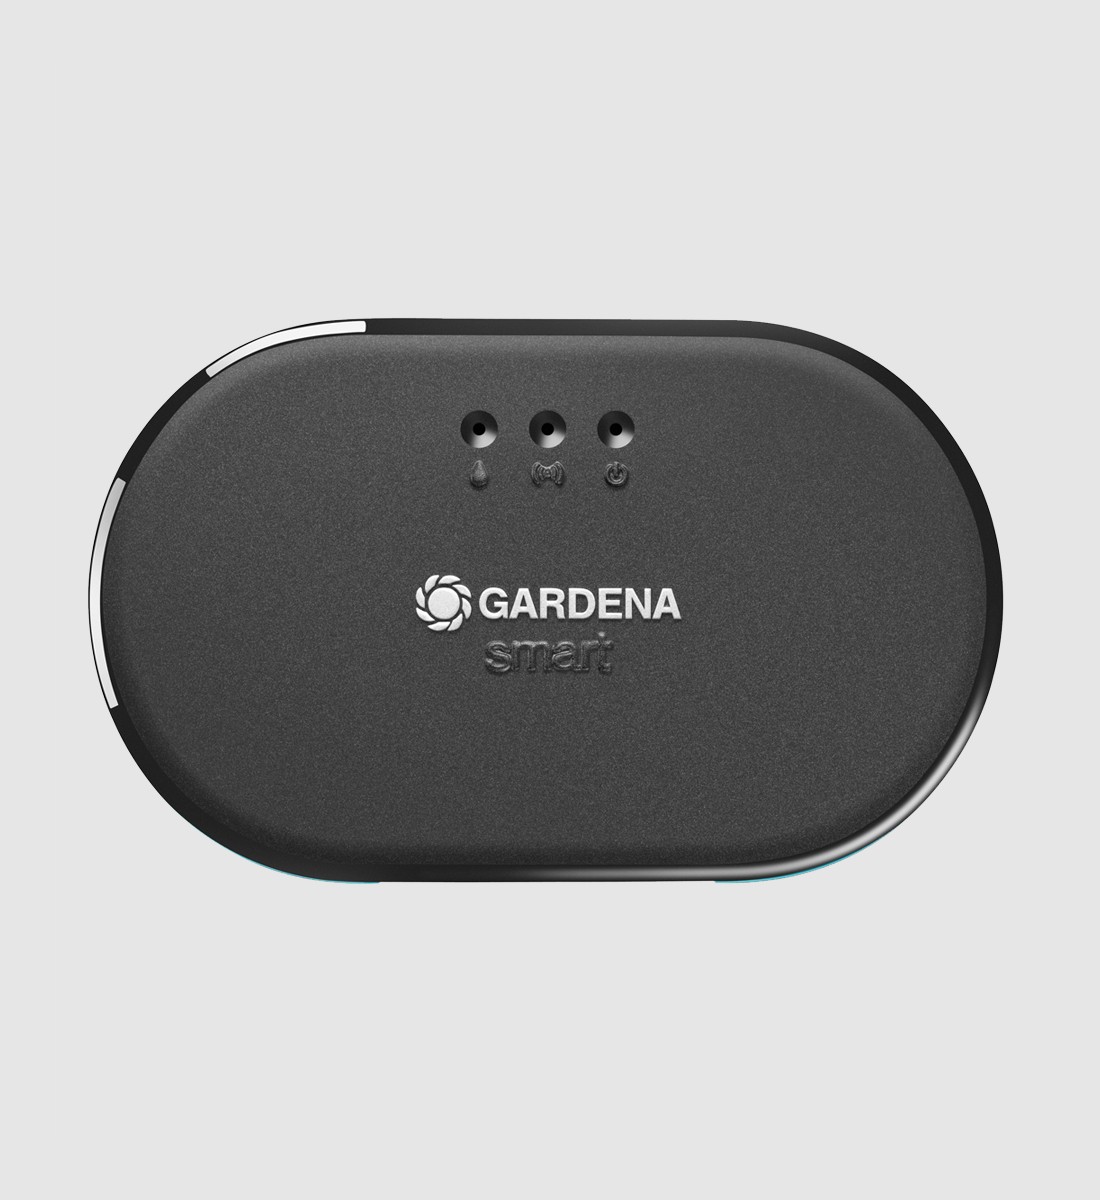 Gardena - Smart Irrigation Control